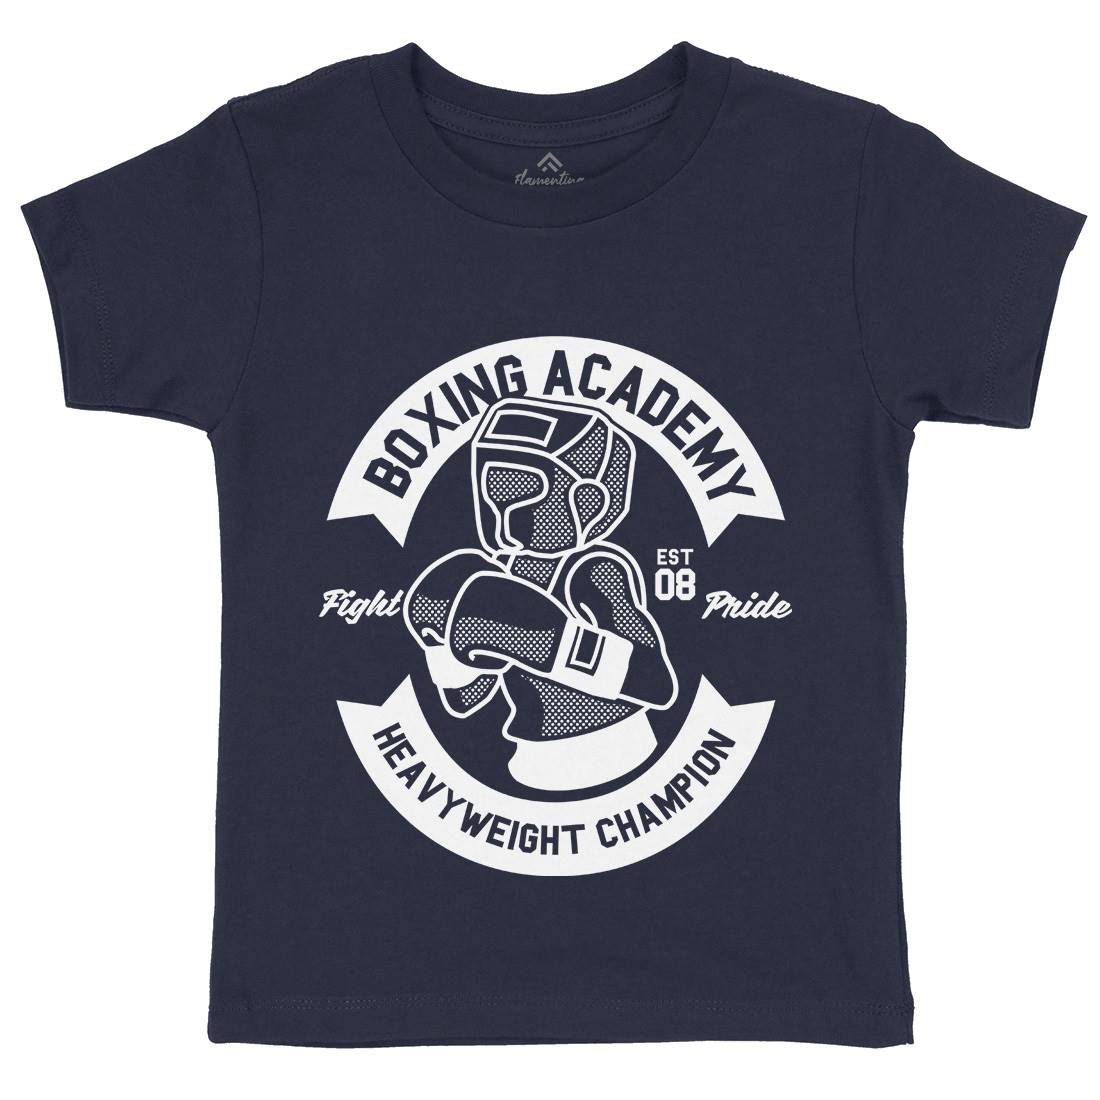 Boxing Academy Kids Organic Crew Neck T-Shirt Gym A213